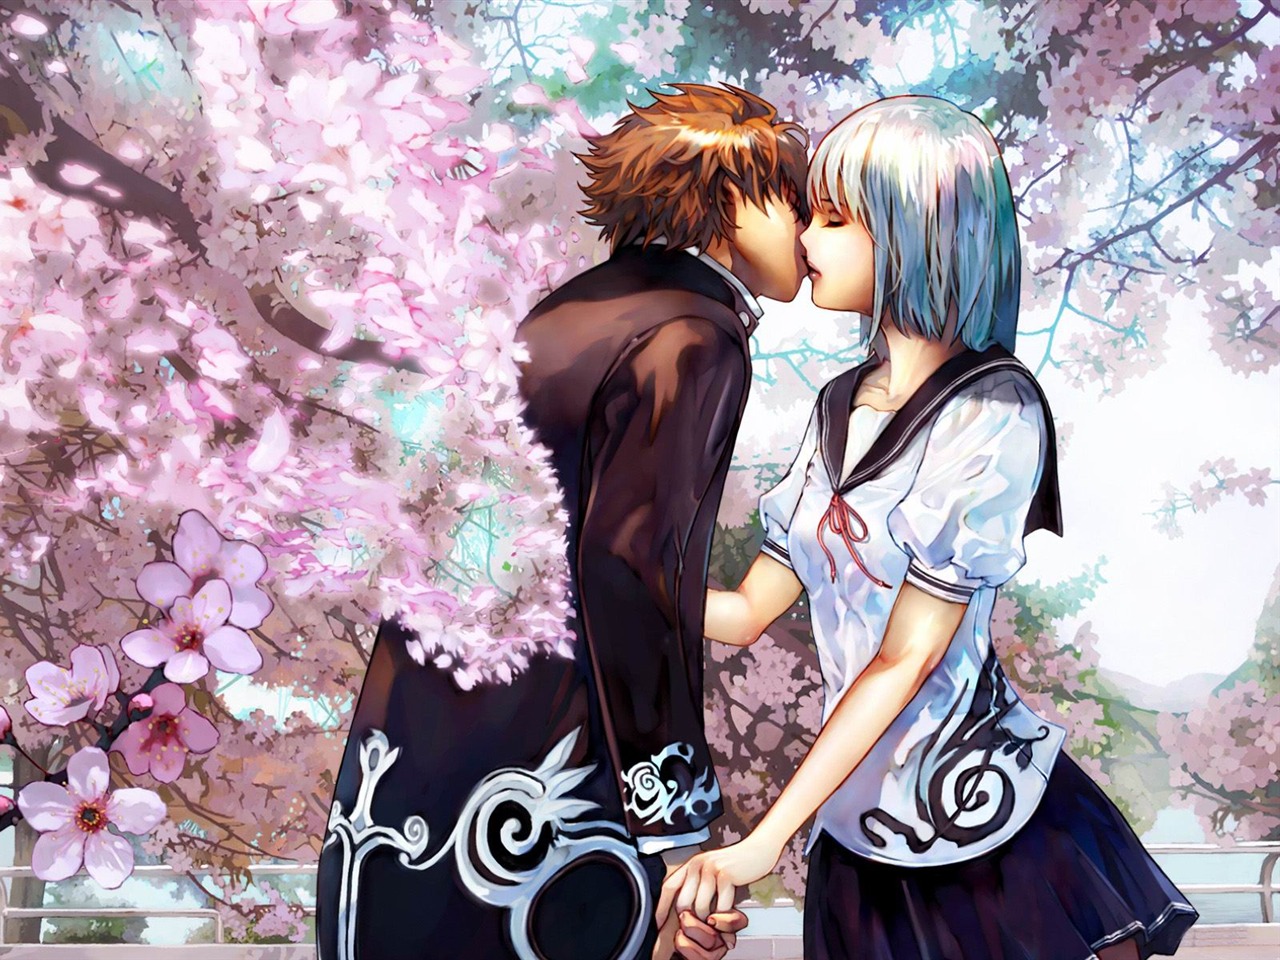 Anime Couple Romantic Wallpaper Pictures